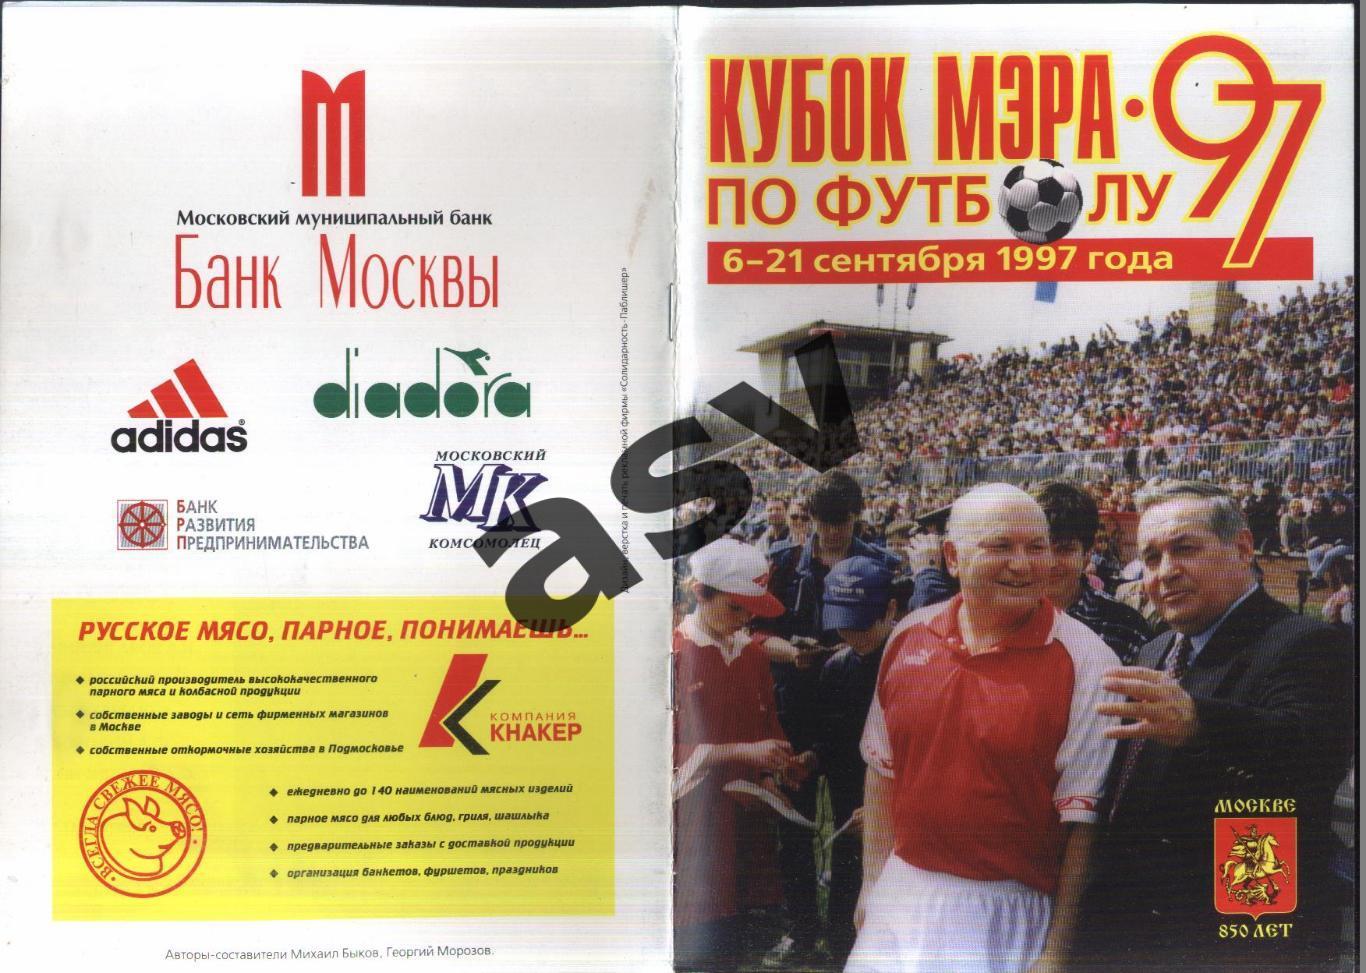 Кубок Мэра Москвы — 06-21.09.1997